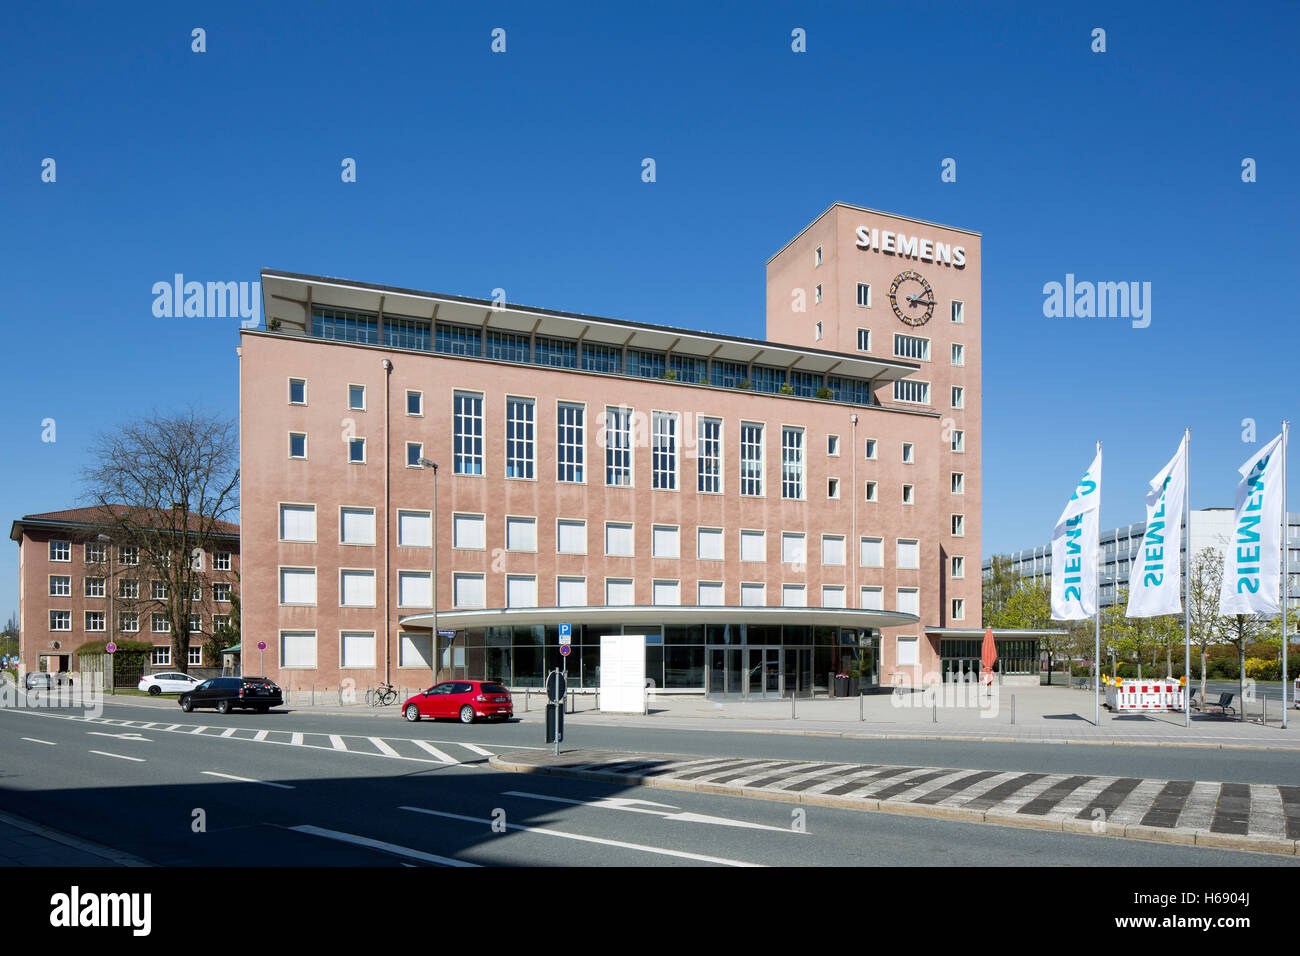 Siemens Schuckertscher administration building, called Himbeerpalast, Raspberry Palace, office and administration building of Stock Photo